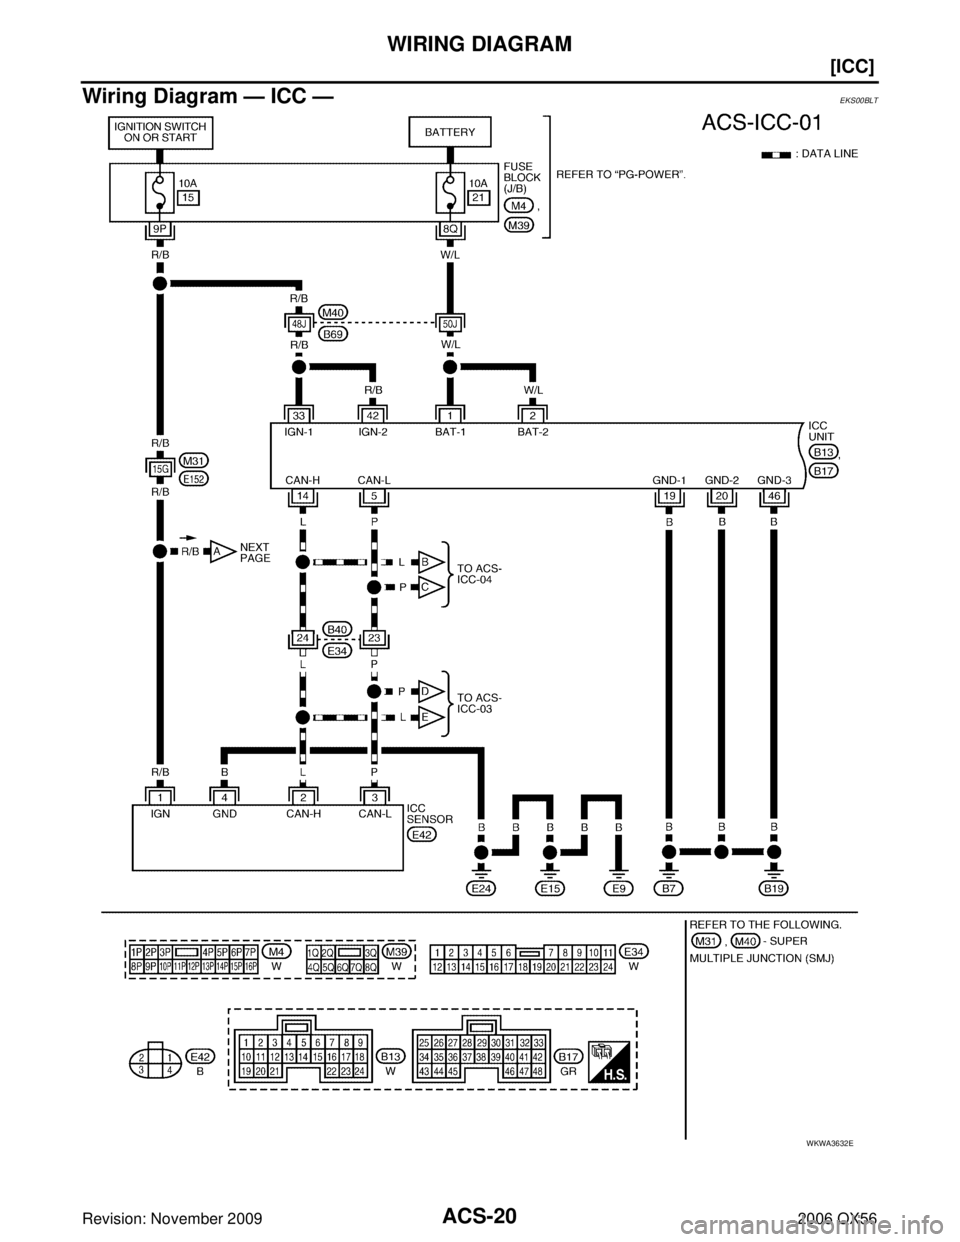 INFINITI QX56 2006  Factory Owners Guide ACS-20
[ICC]
WIRING DIAGRAM
Revision: November 20092006 QX56
Wiring Diagram — ICC —EKS00BLT
WKWA3632E 